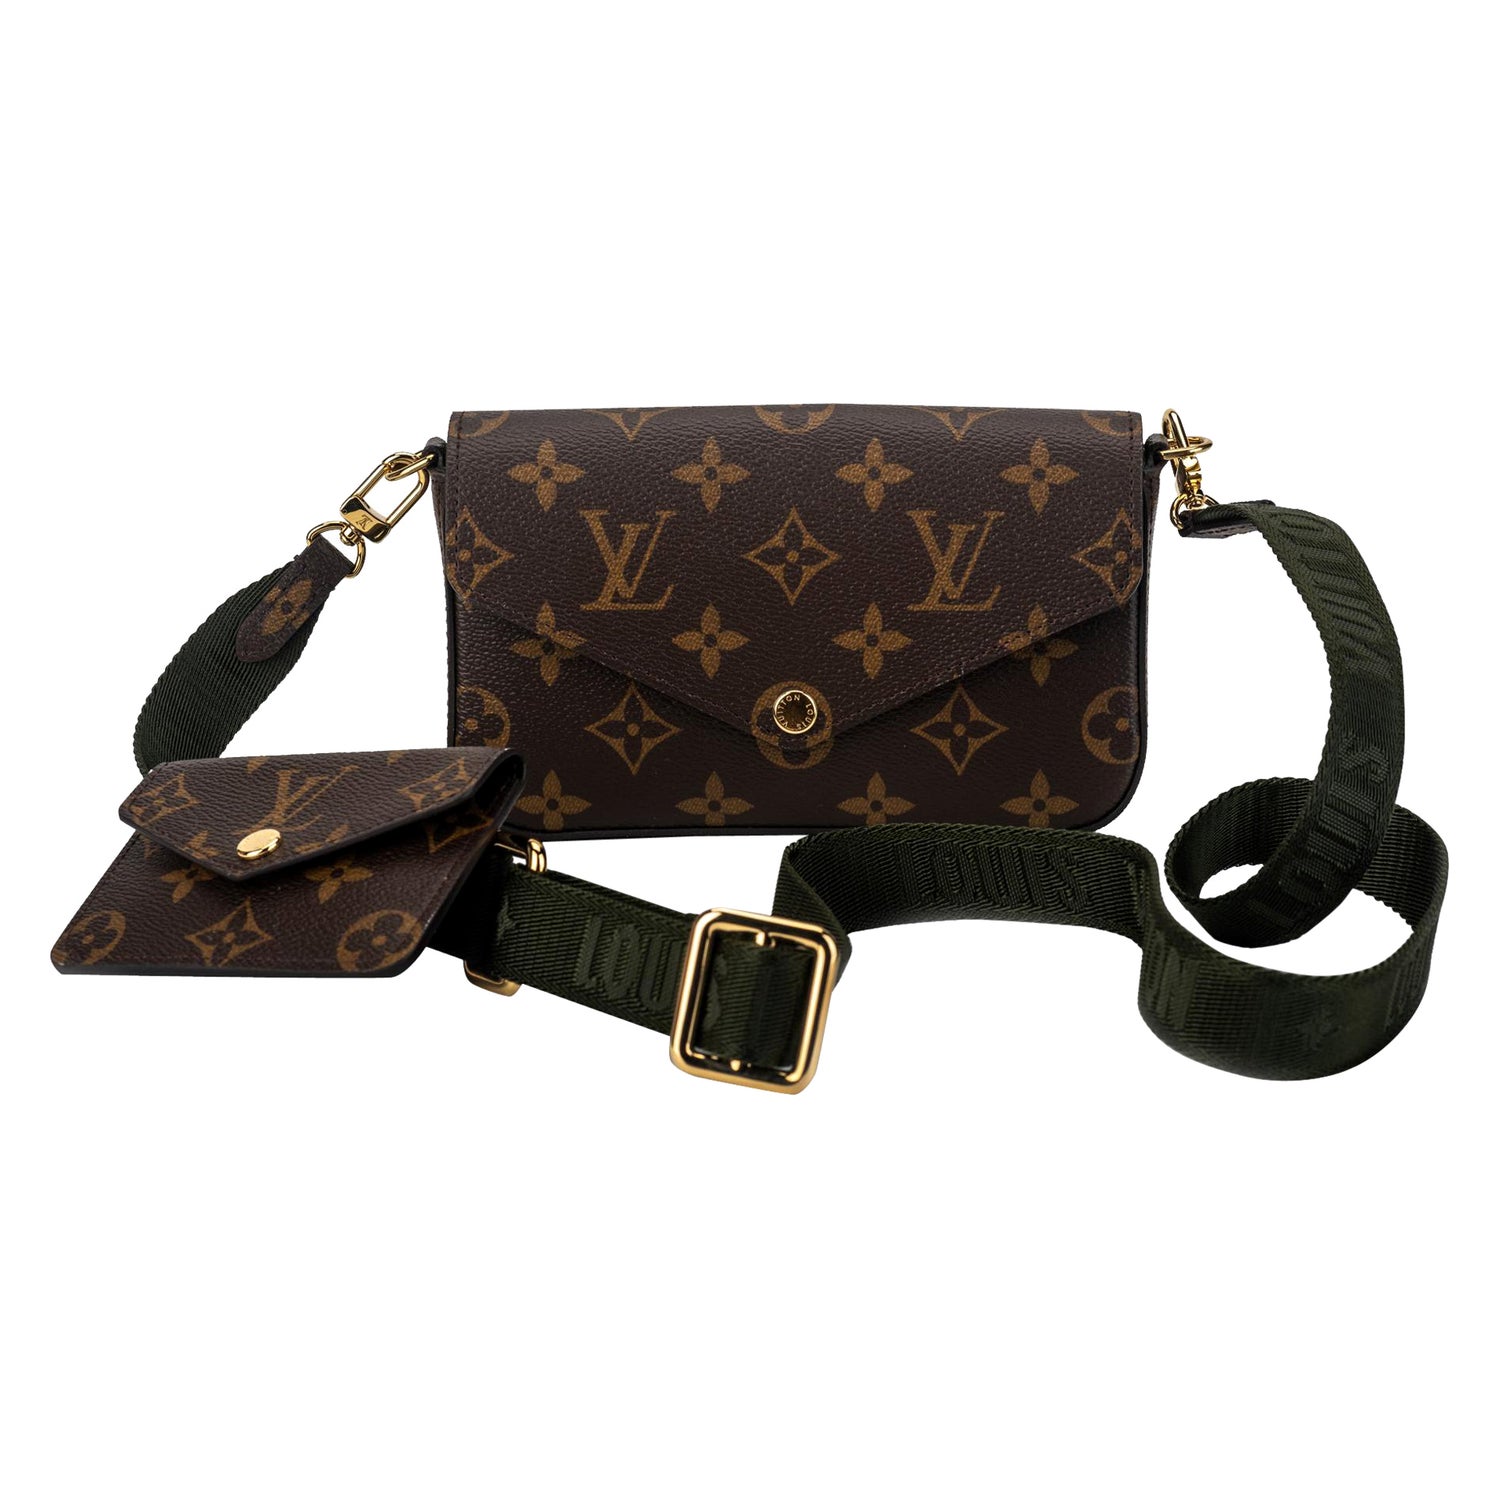 $2800 Louis Vuitton Monogram Canvas Multi Pochette Bag with Khaki